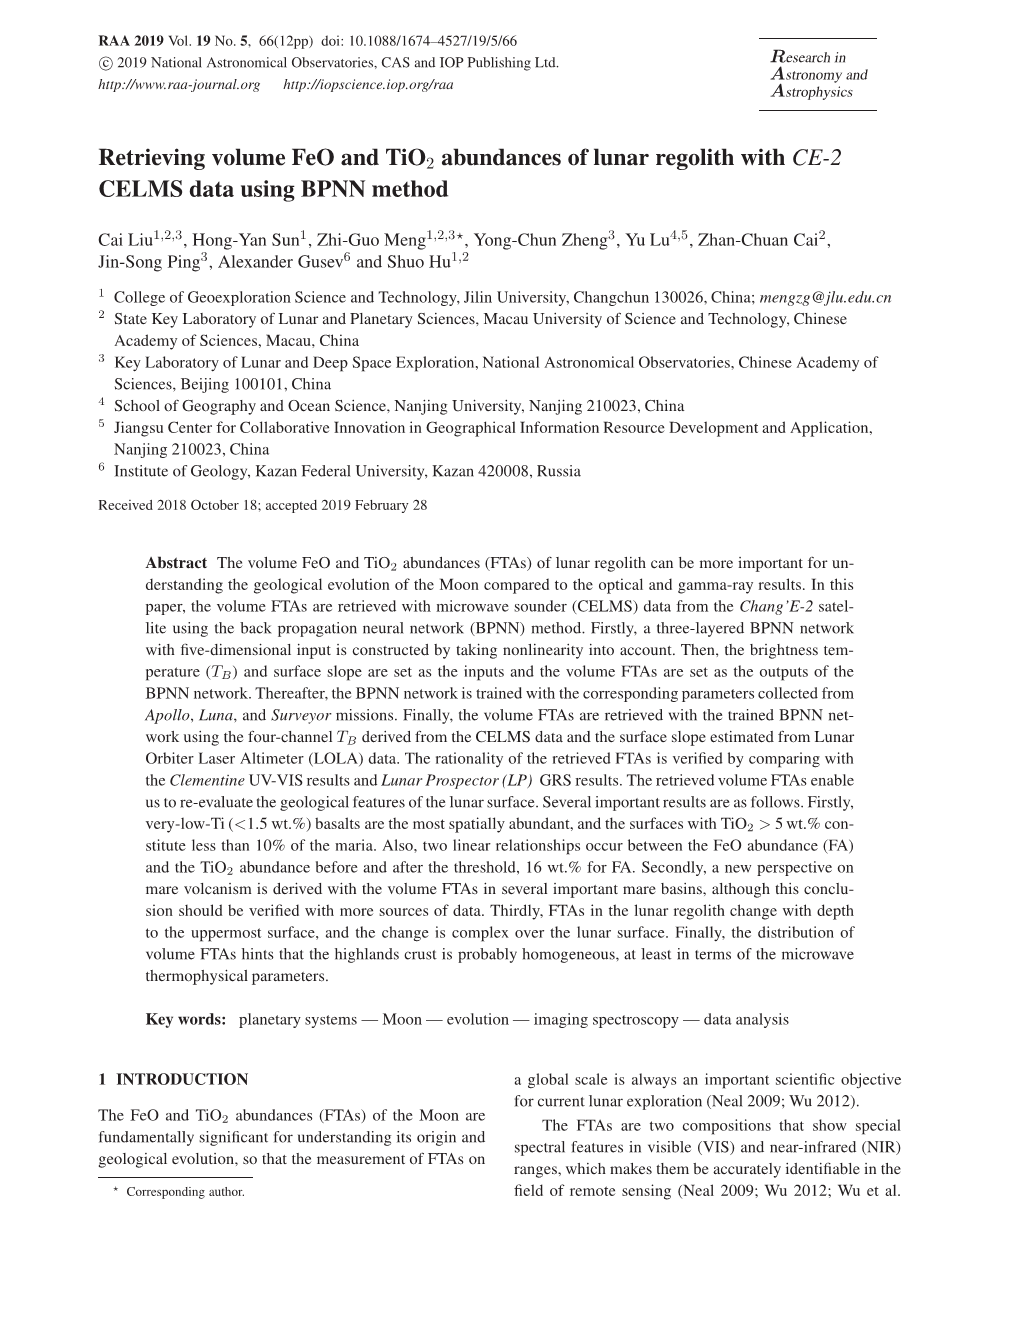 Retrieving Volume Feo and Tio2 Abundances of Lunar Regolith with CE-2 CELMS Data Using BPNN Method